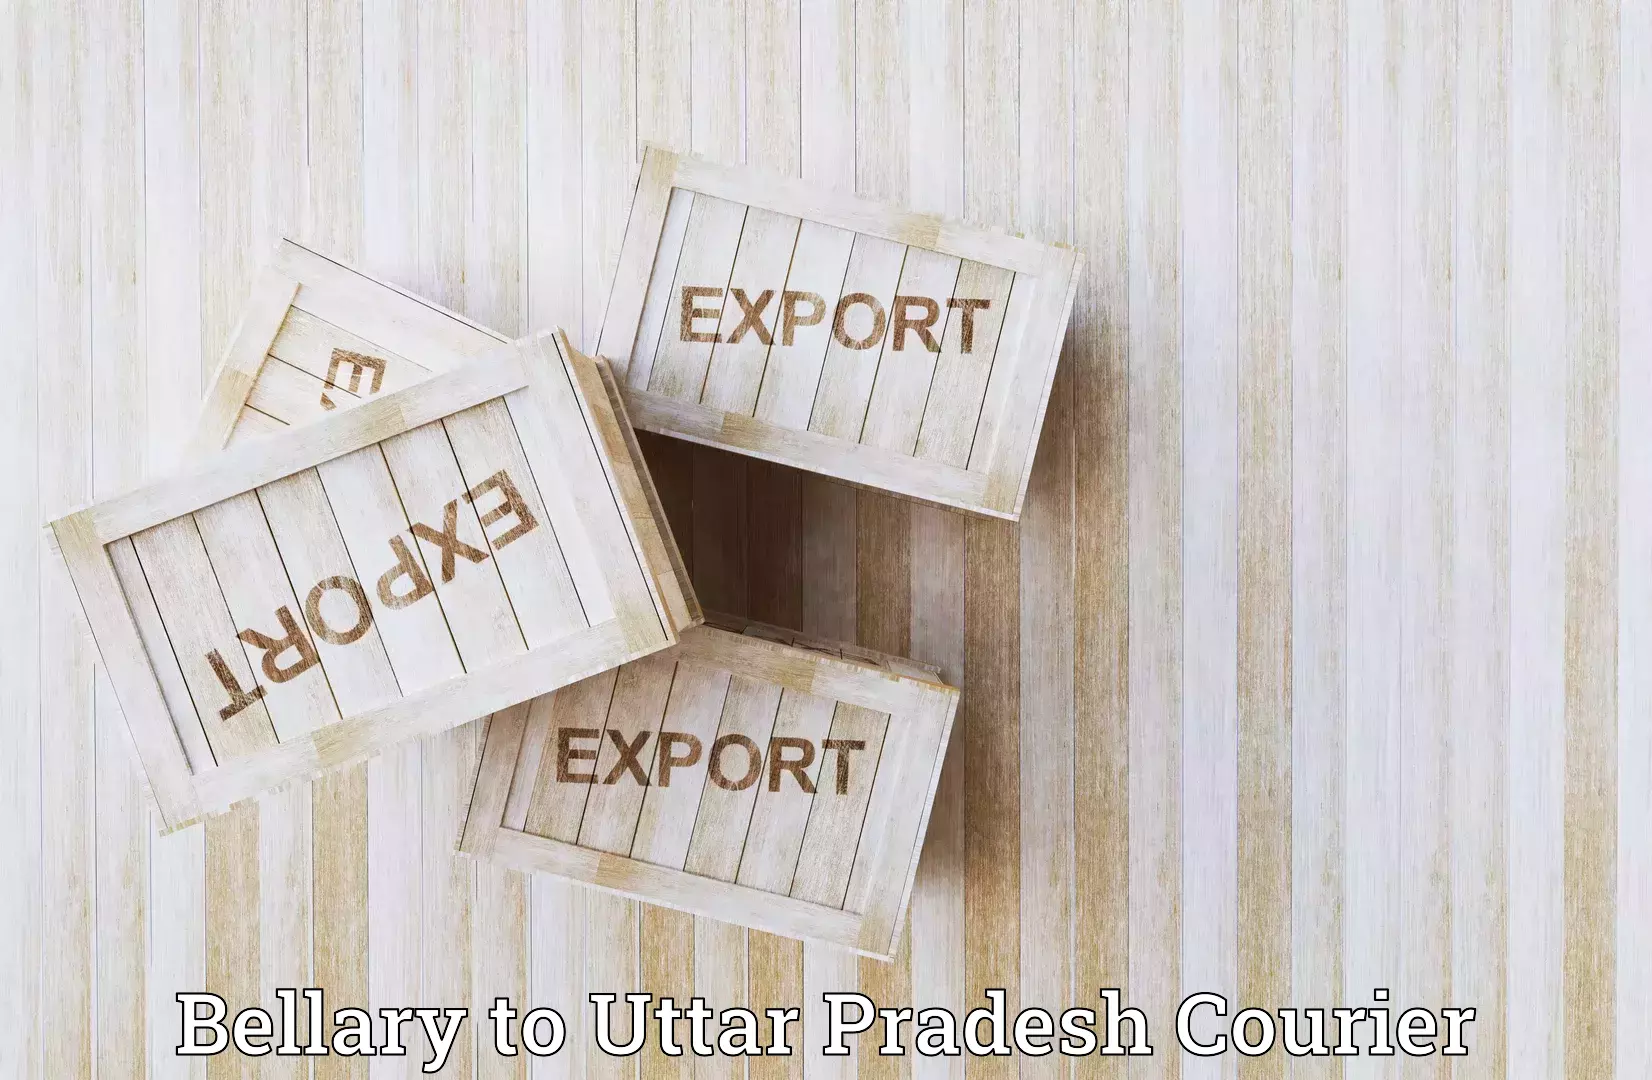 Local delivery service Bellary to Uttar Pradesh